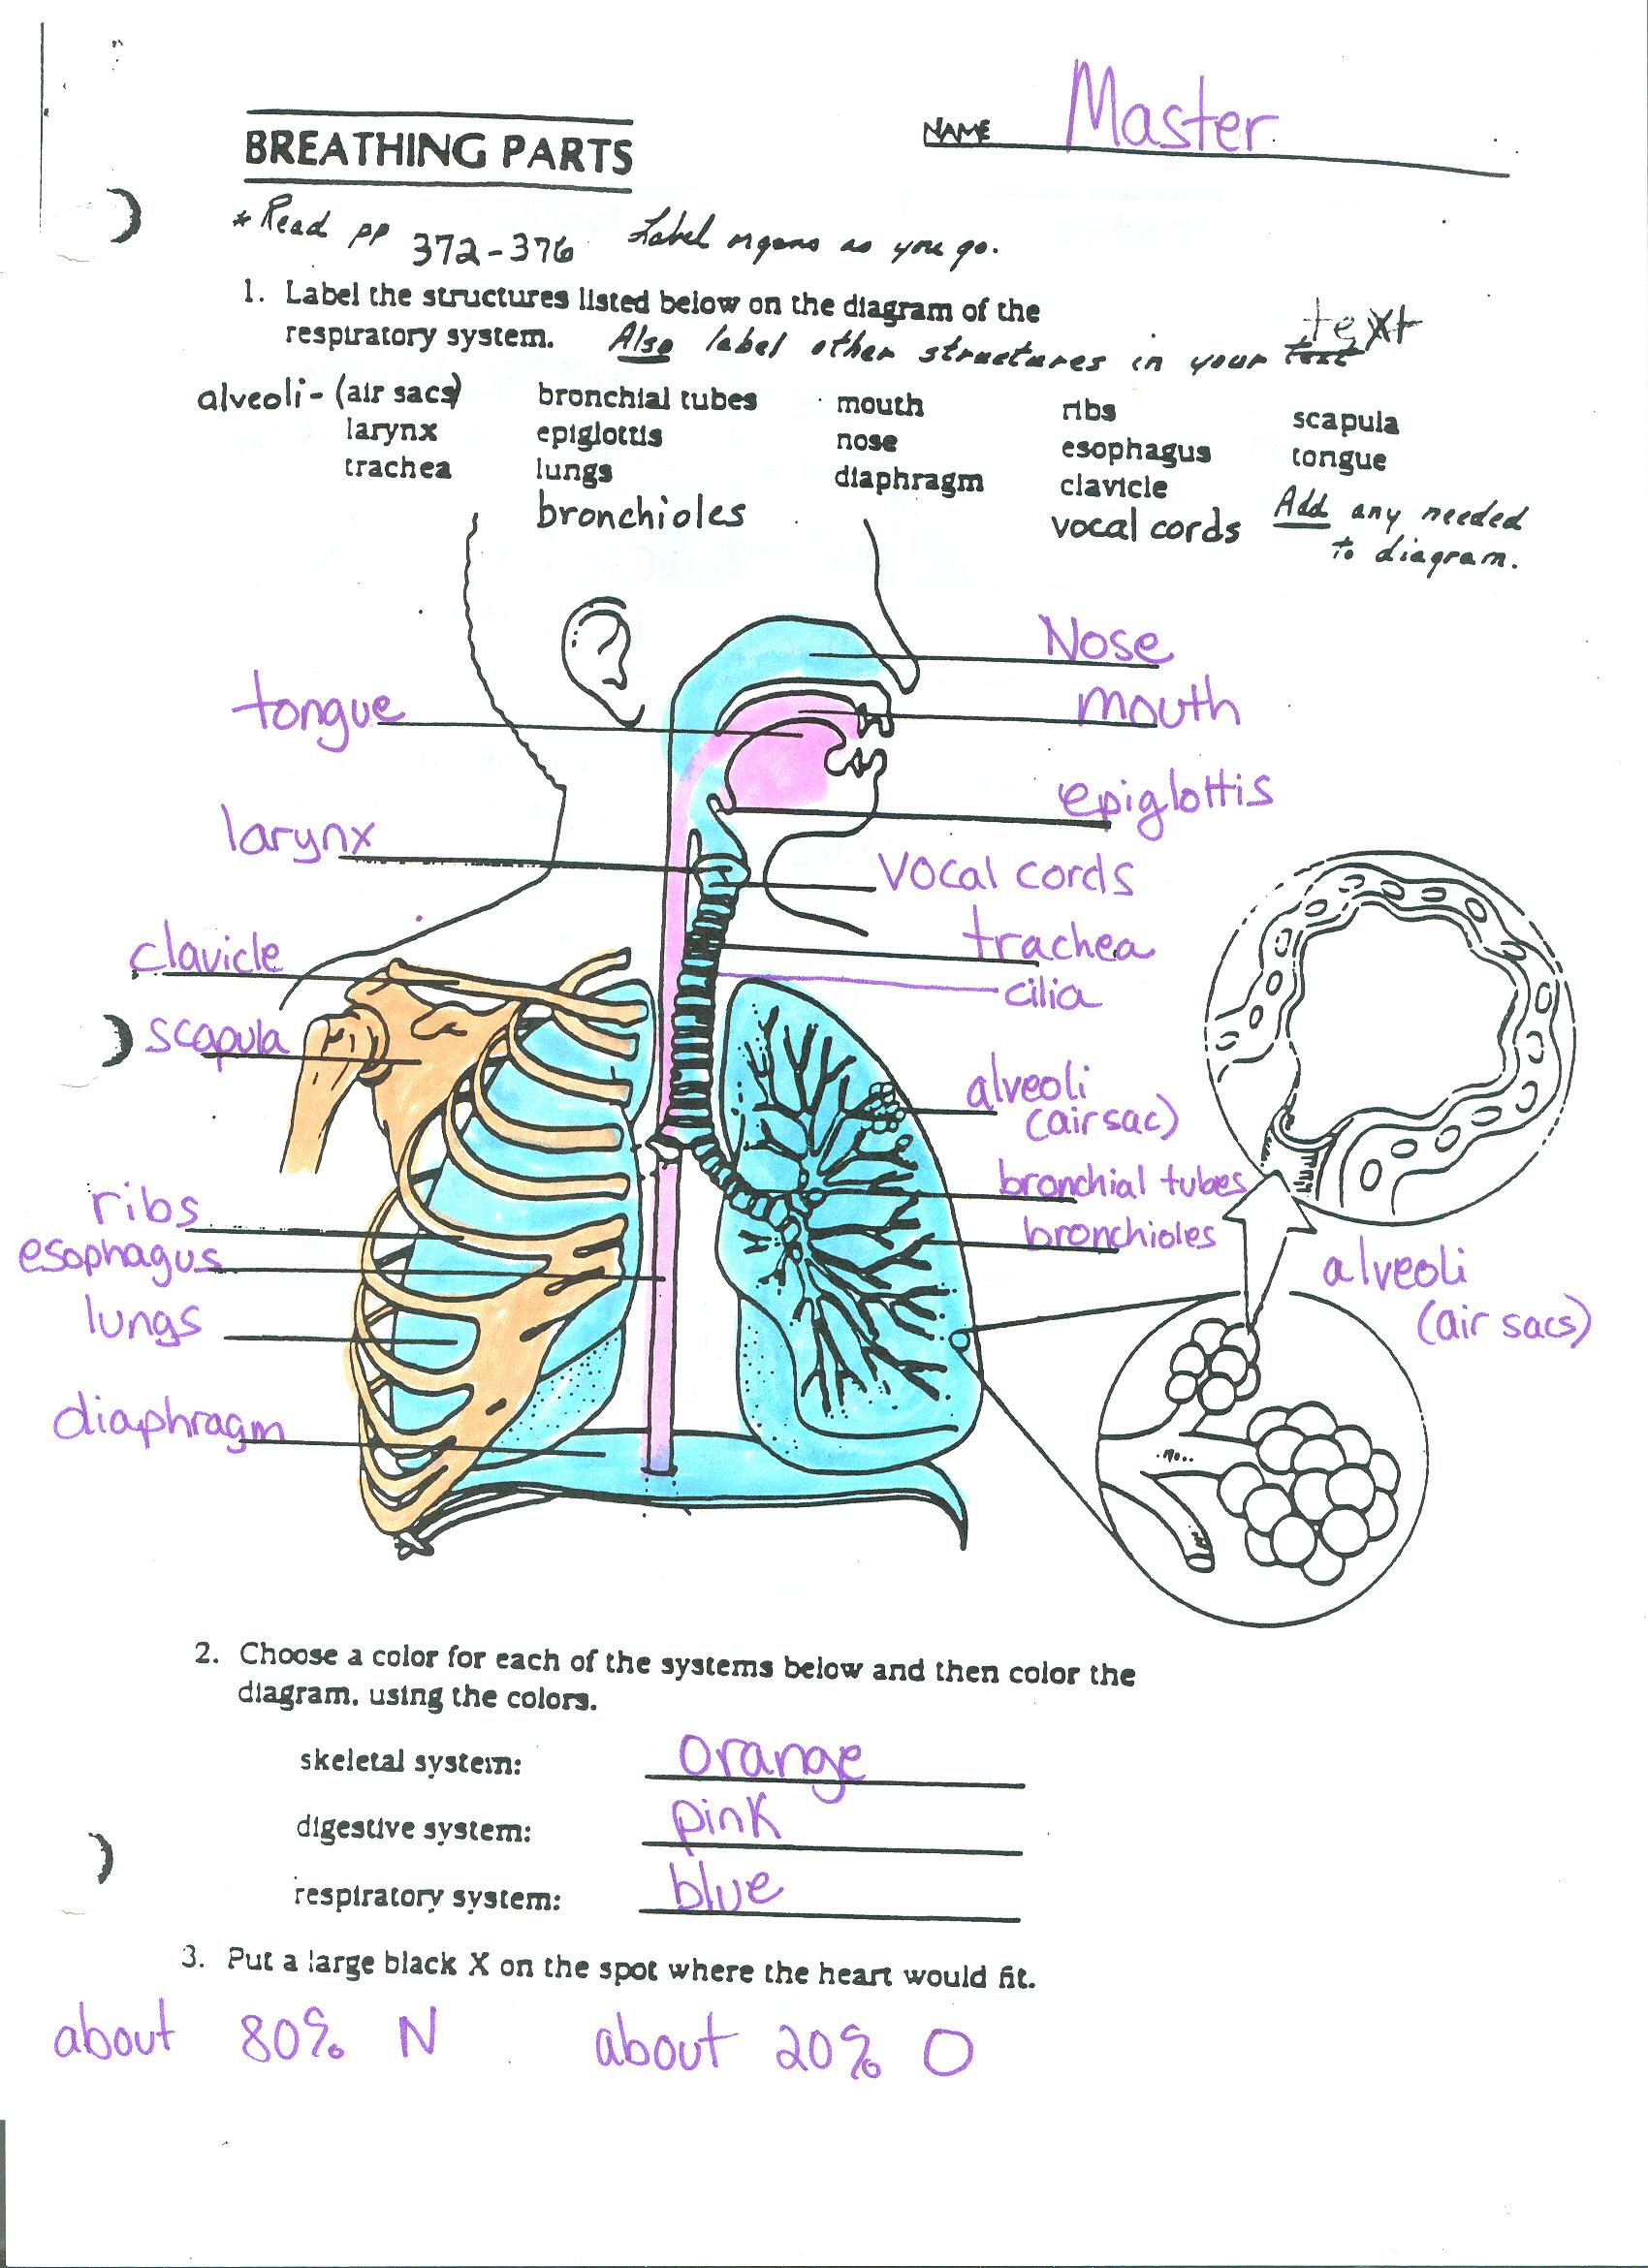 Diagram Of The Respiratory System Respiratory System Diagram And Vocabulary Ms Crawley